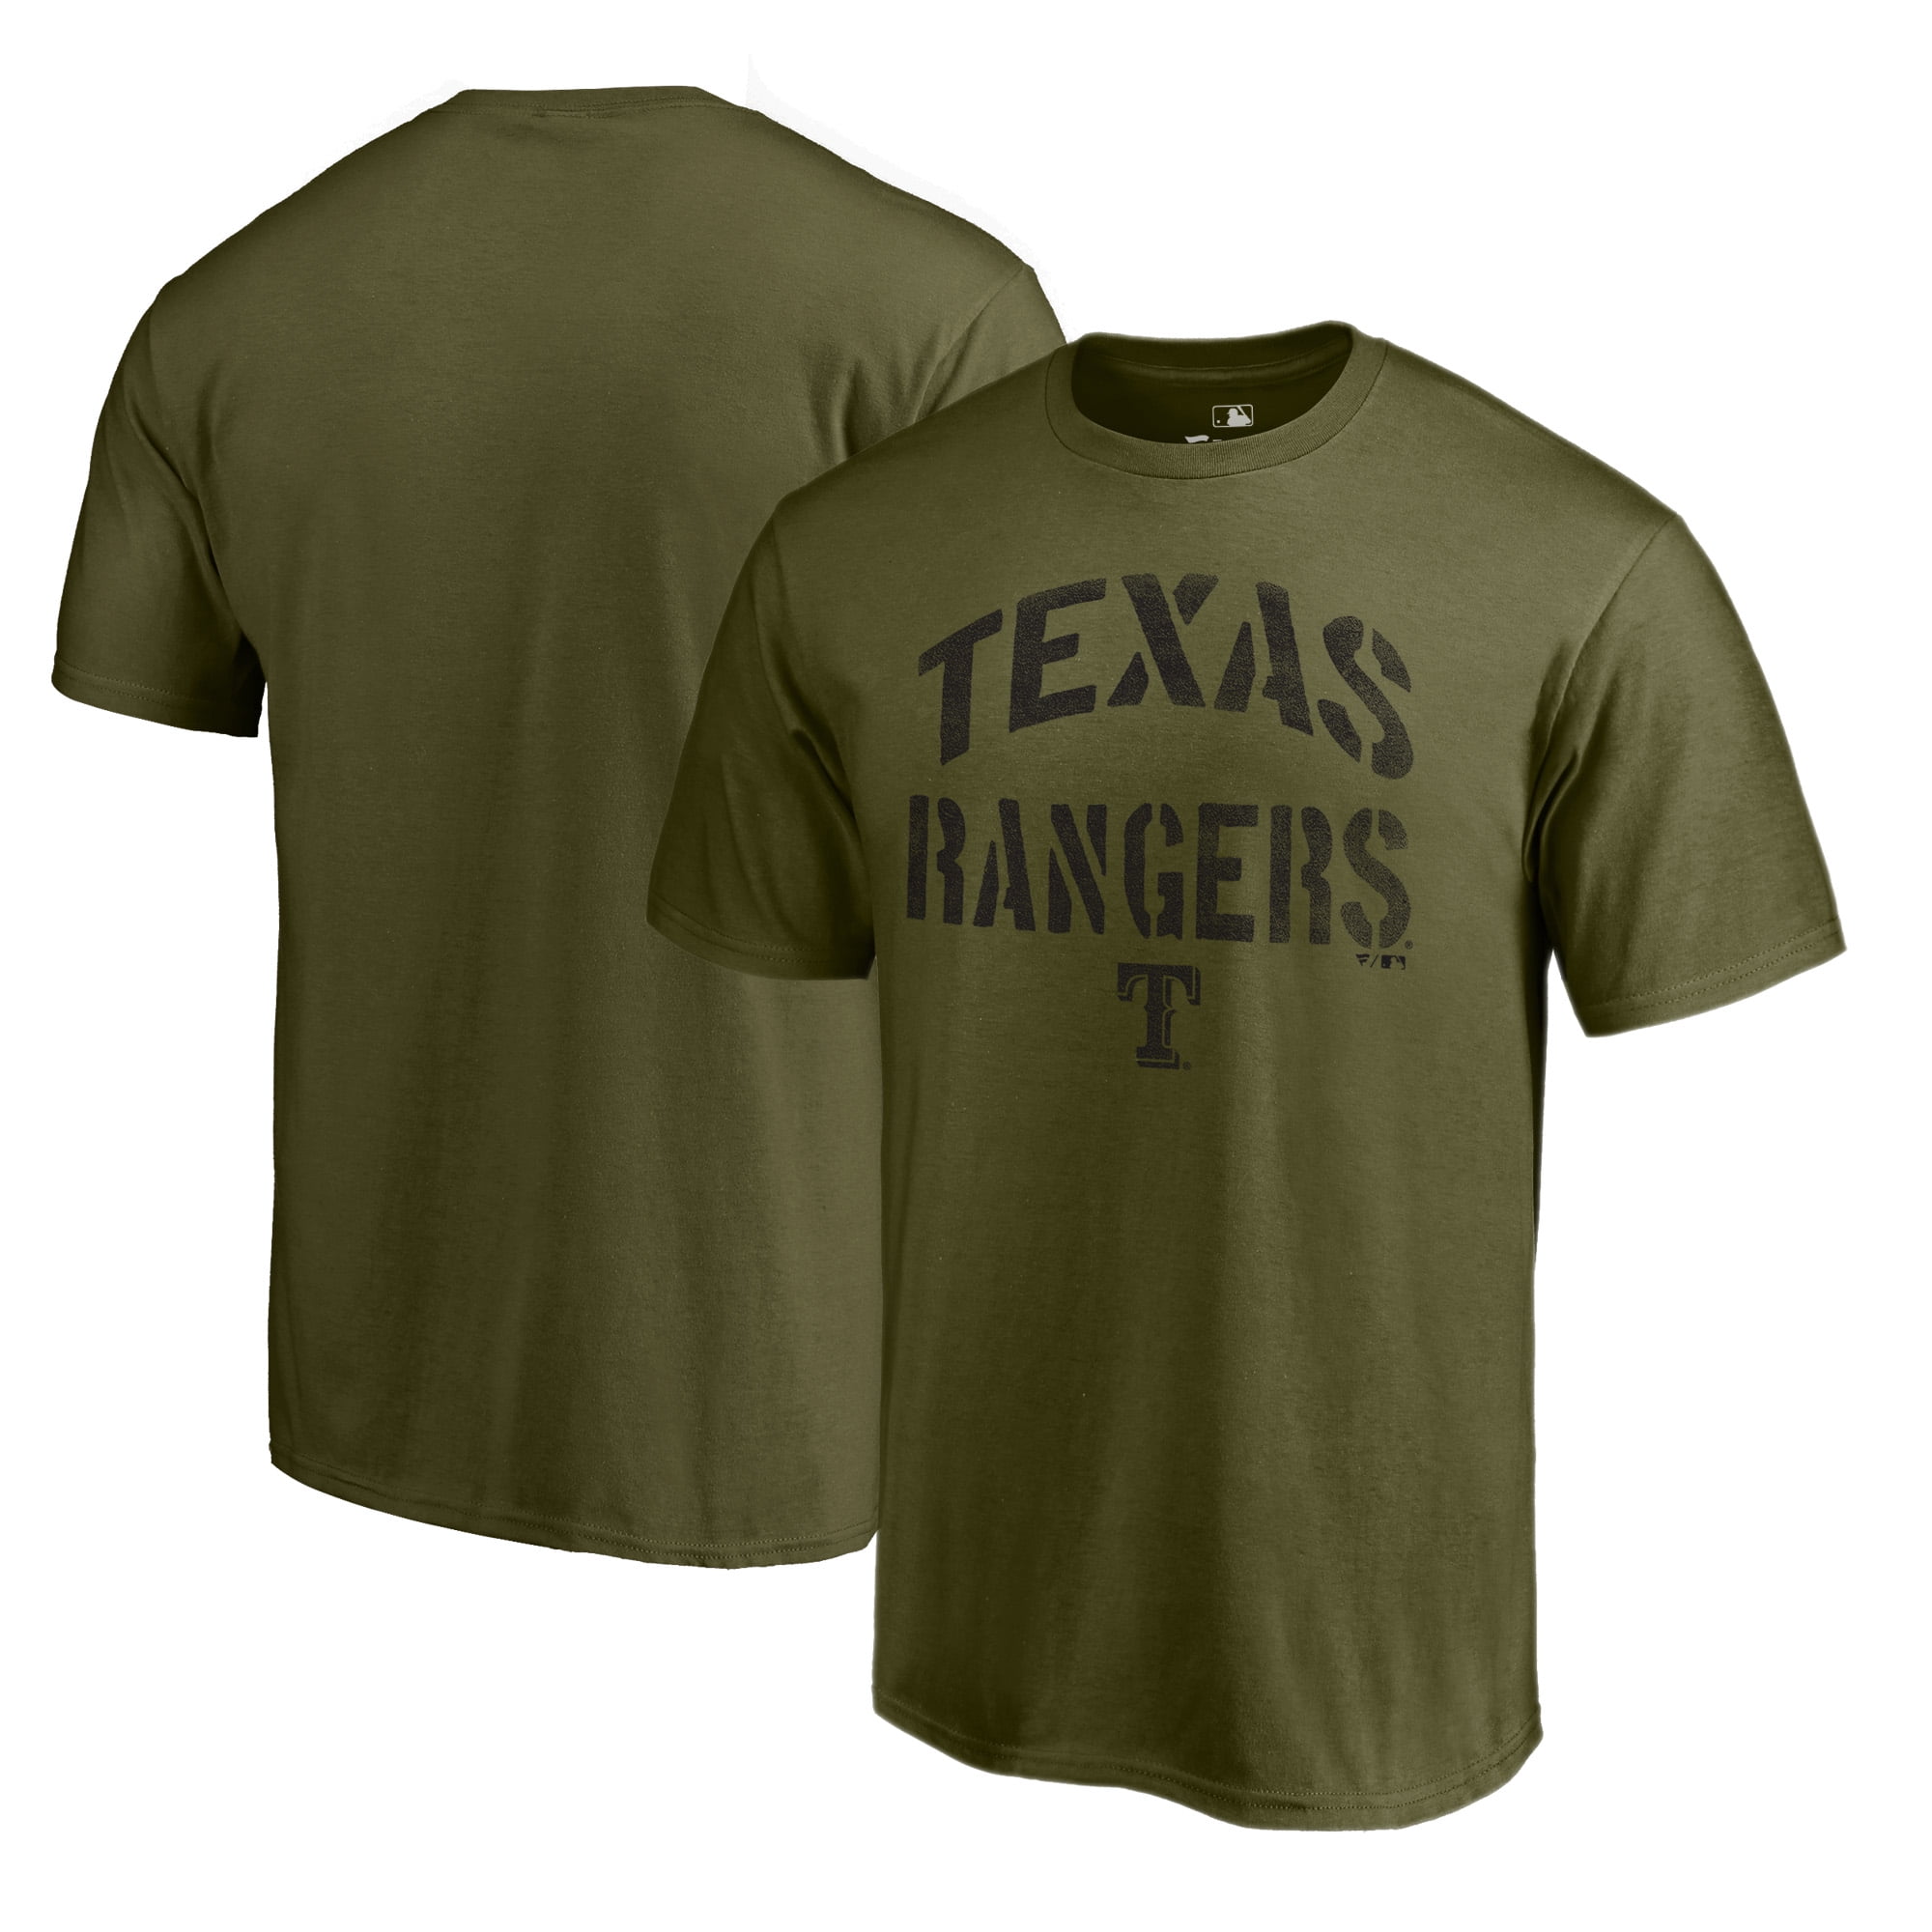 texas rangers memorial day shirt